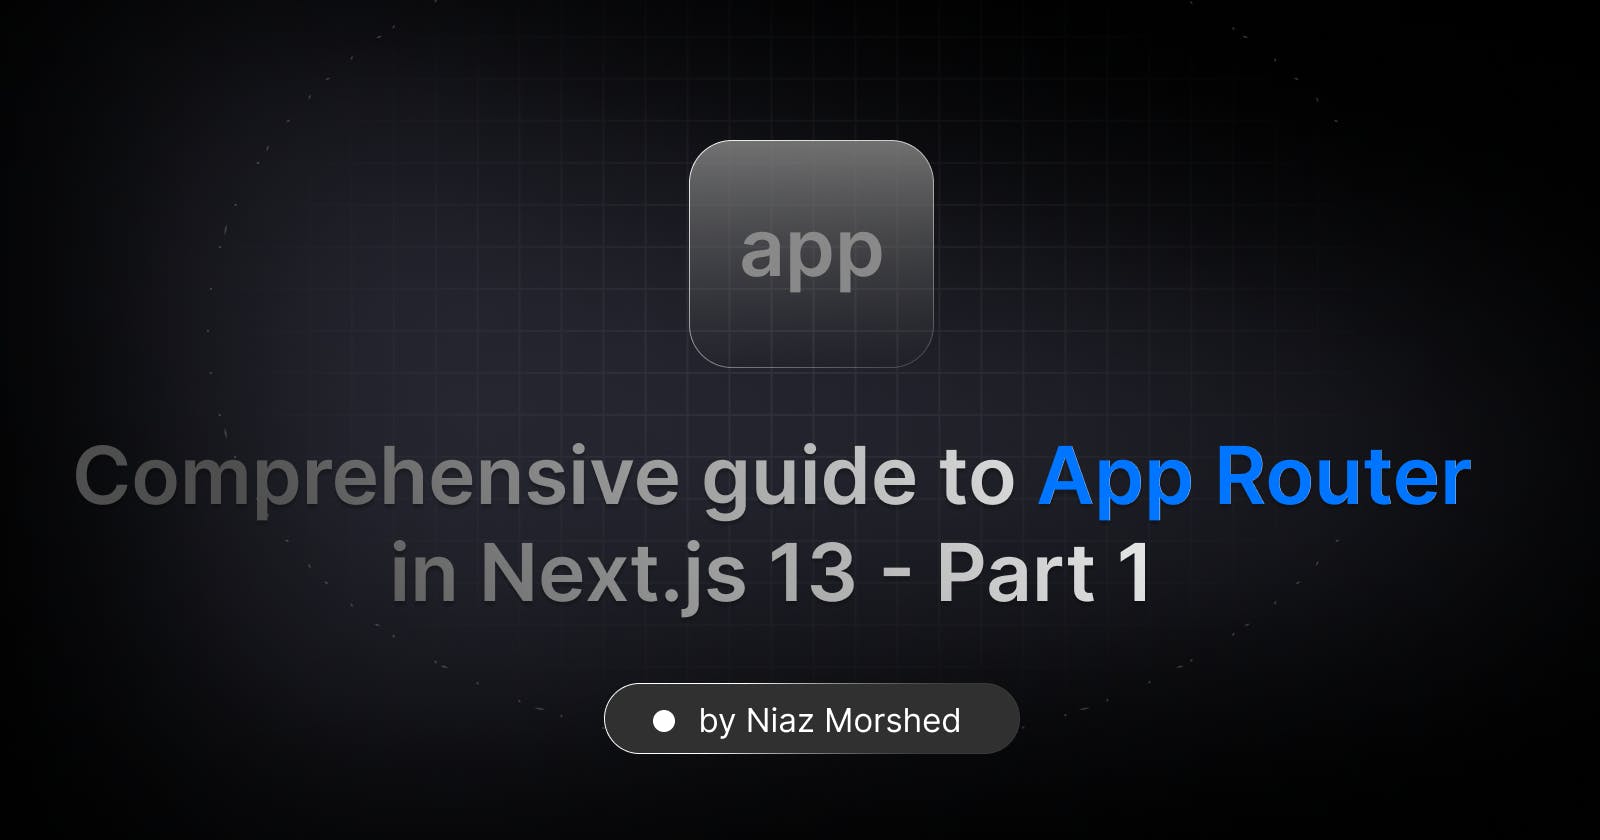 A comprehensive guide to Next.js 13 App Router - Part 1